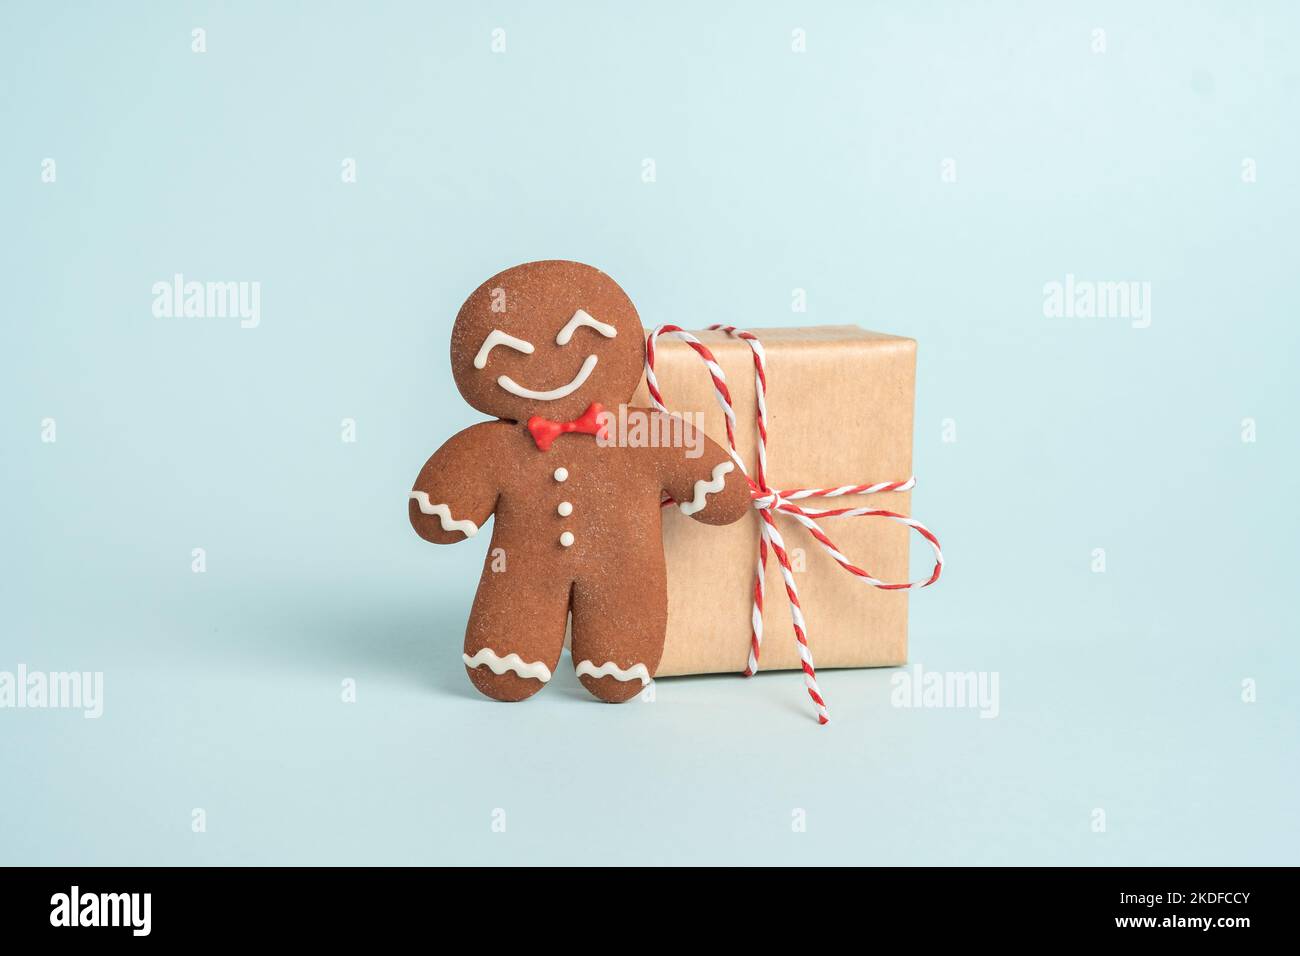 Cute Gingerbread man Stock Photo